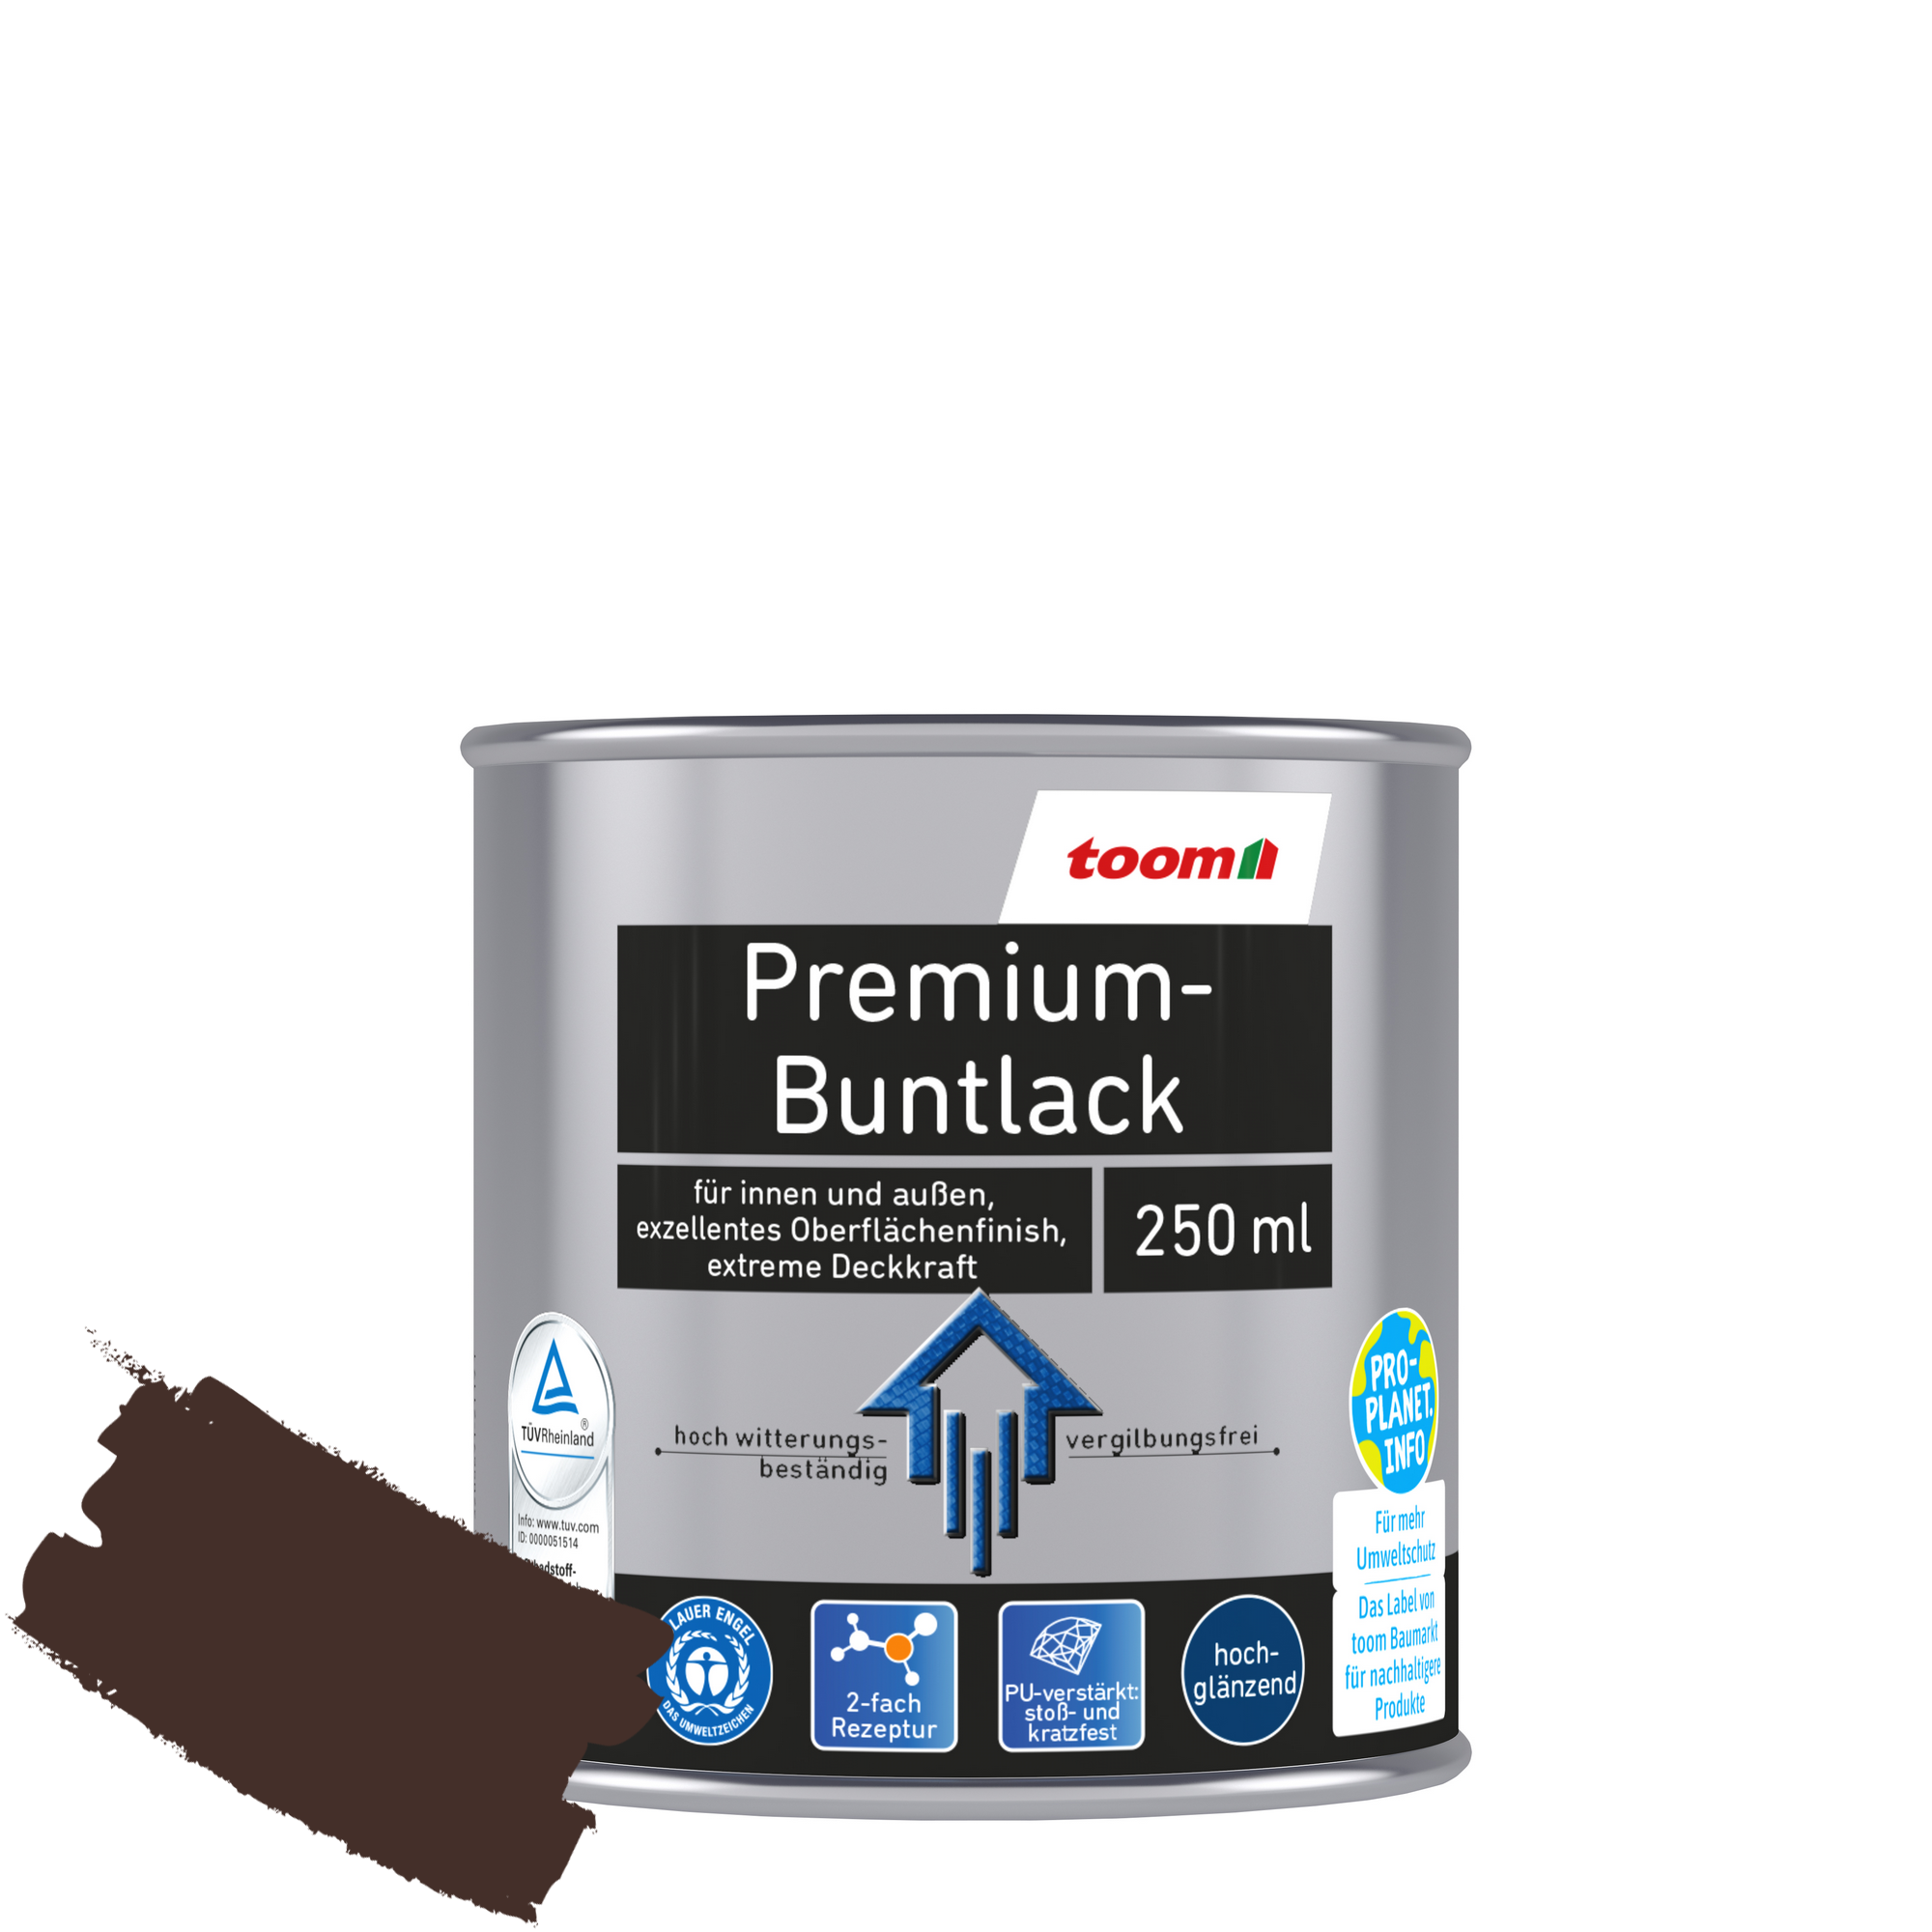 Premium-Buntlack schokobraun glänzend 250 ml + product picture